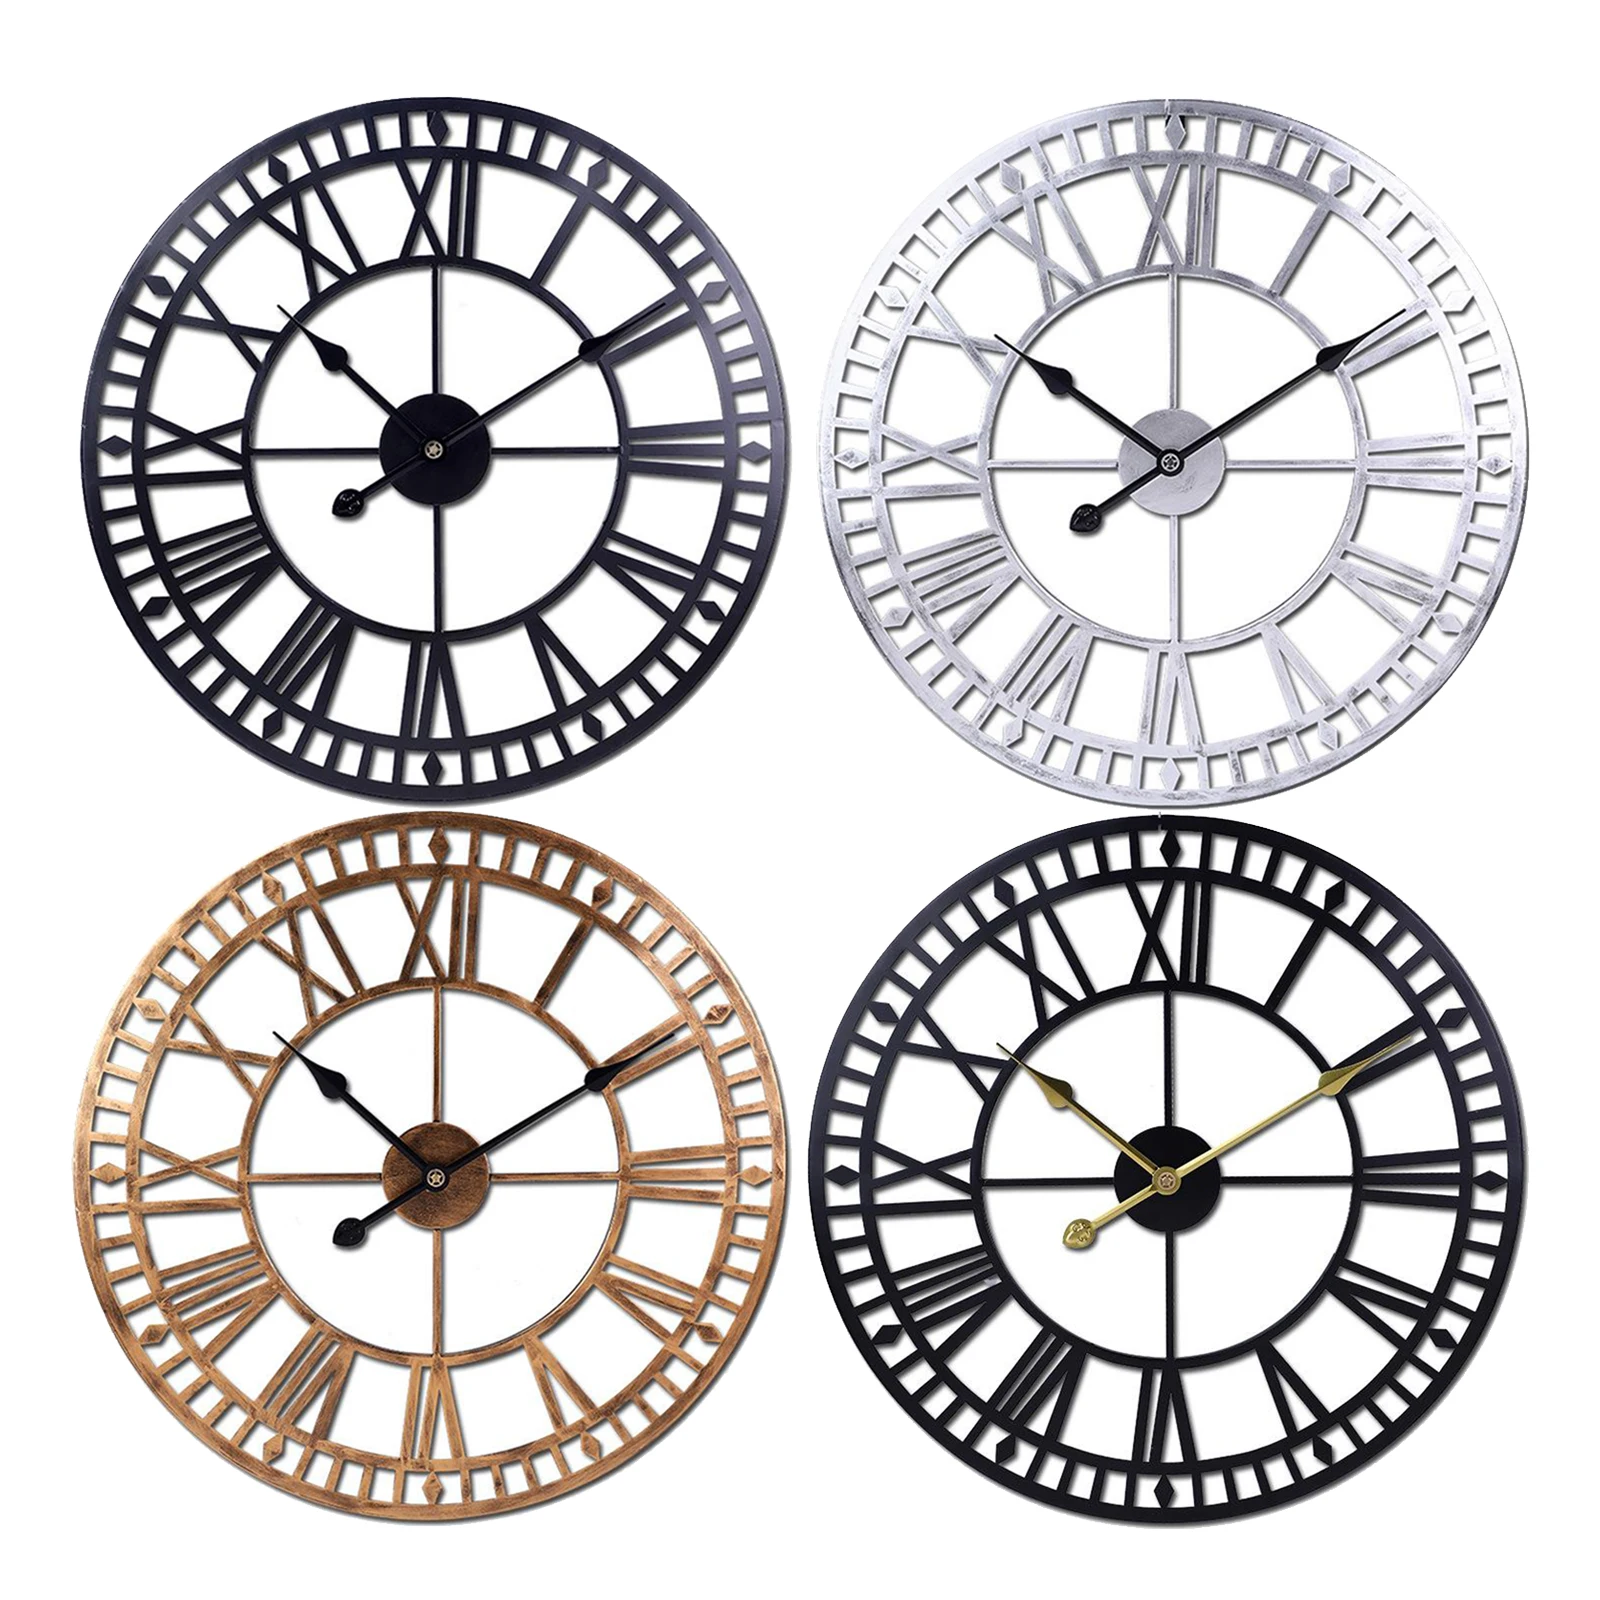 Details about   Vintage Wall Clock 40cm Clocks Quiet Swing Decorative Clocks 